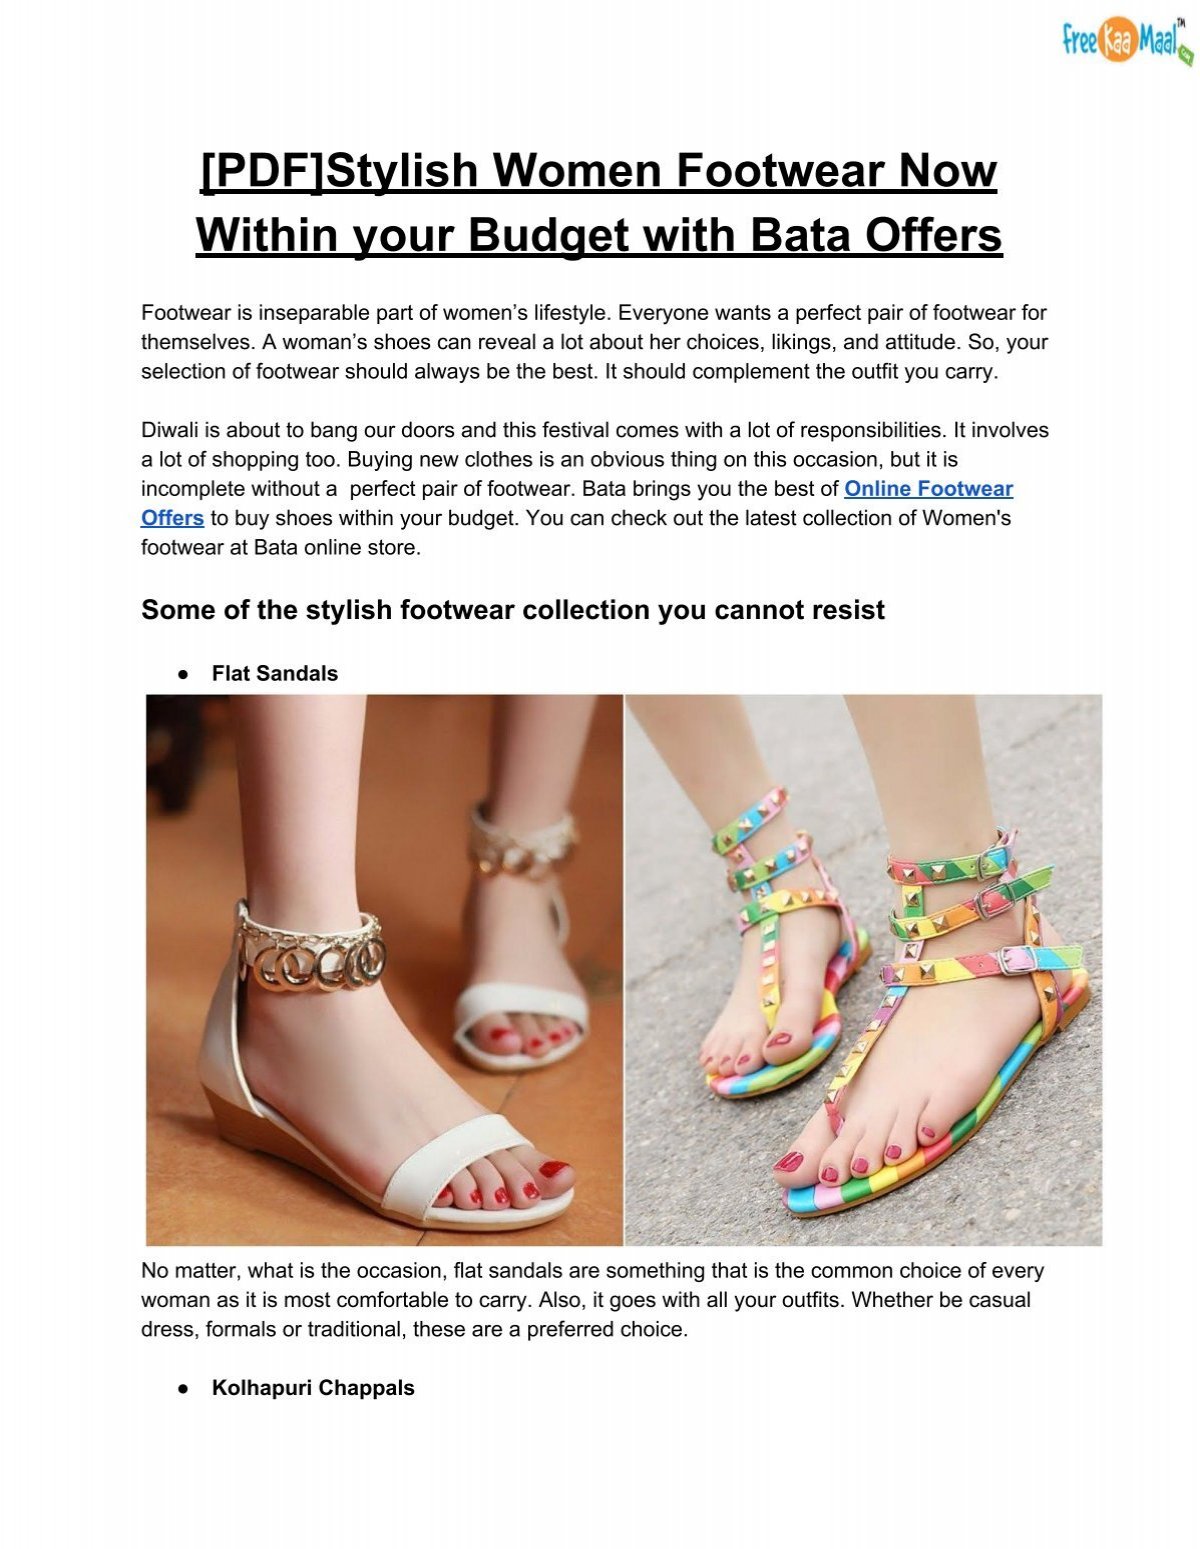 bata ladies shoes online shopping